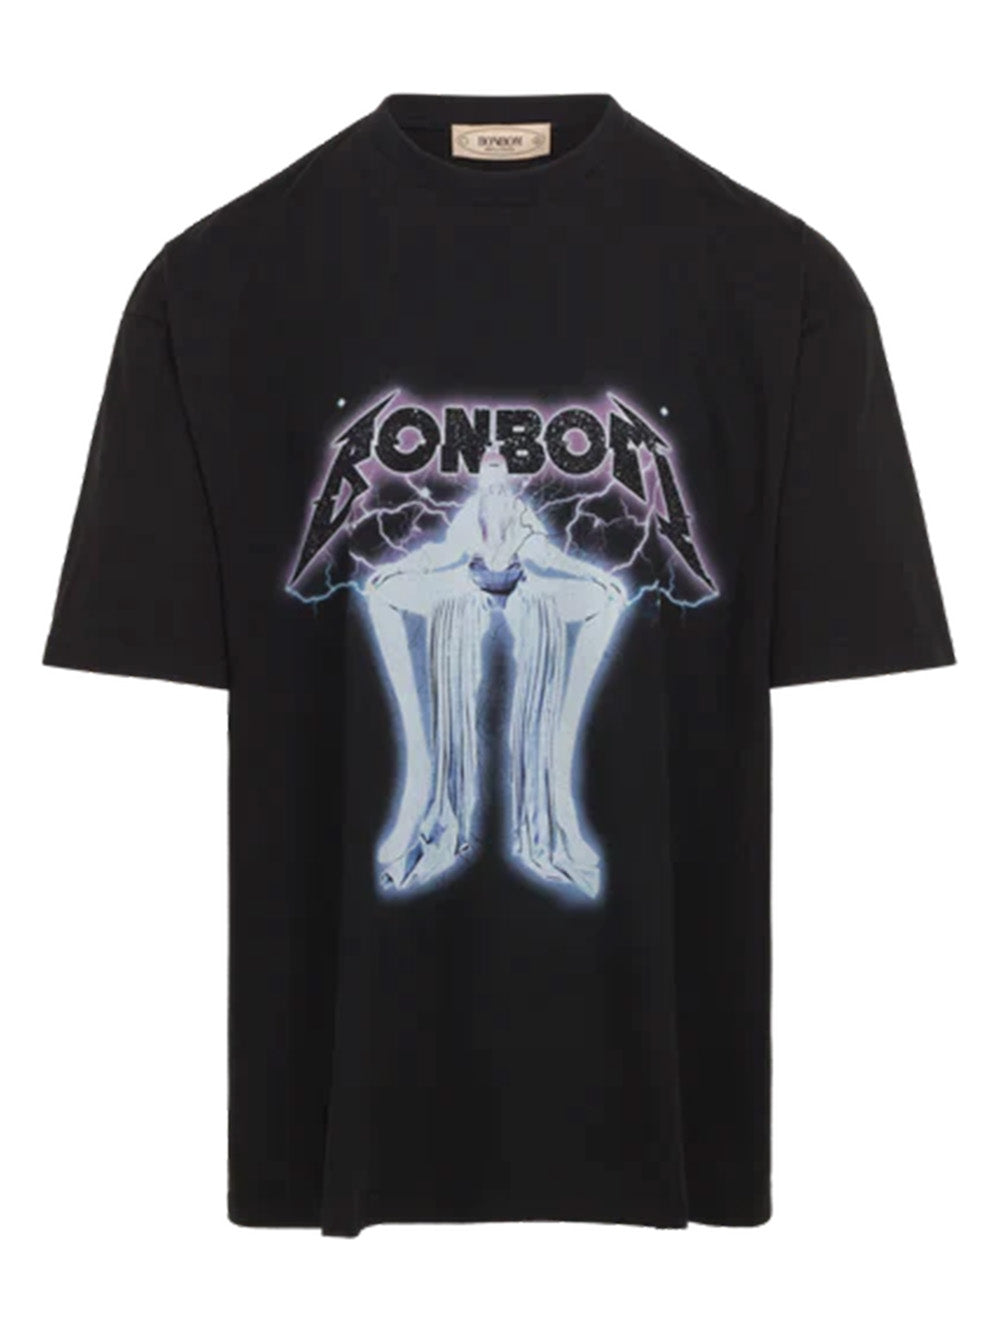    BONBOM-Oversized-T-Shirt-Black-1